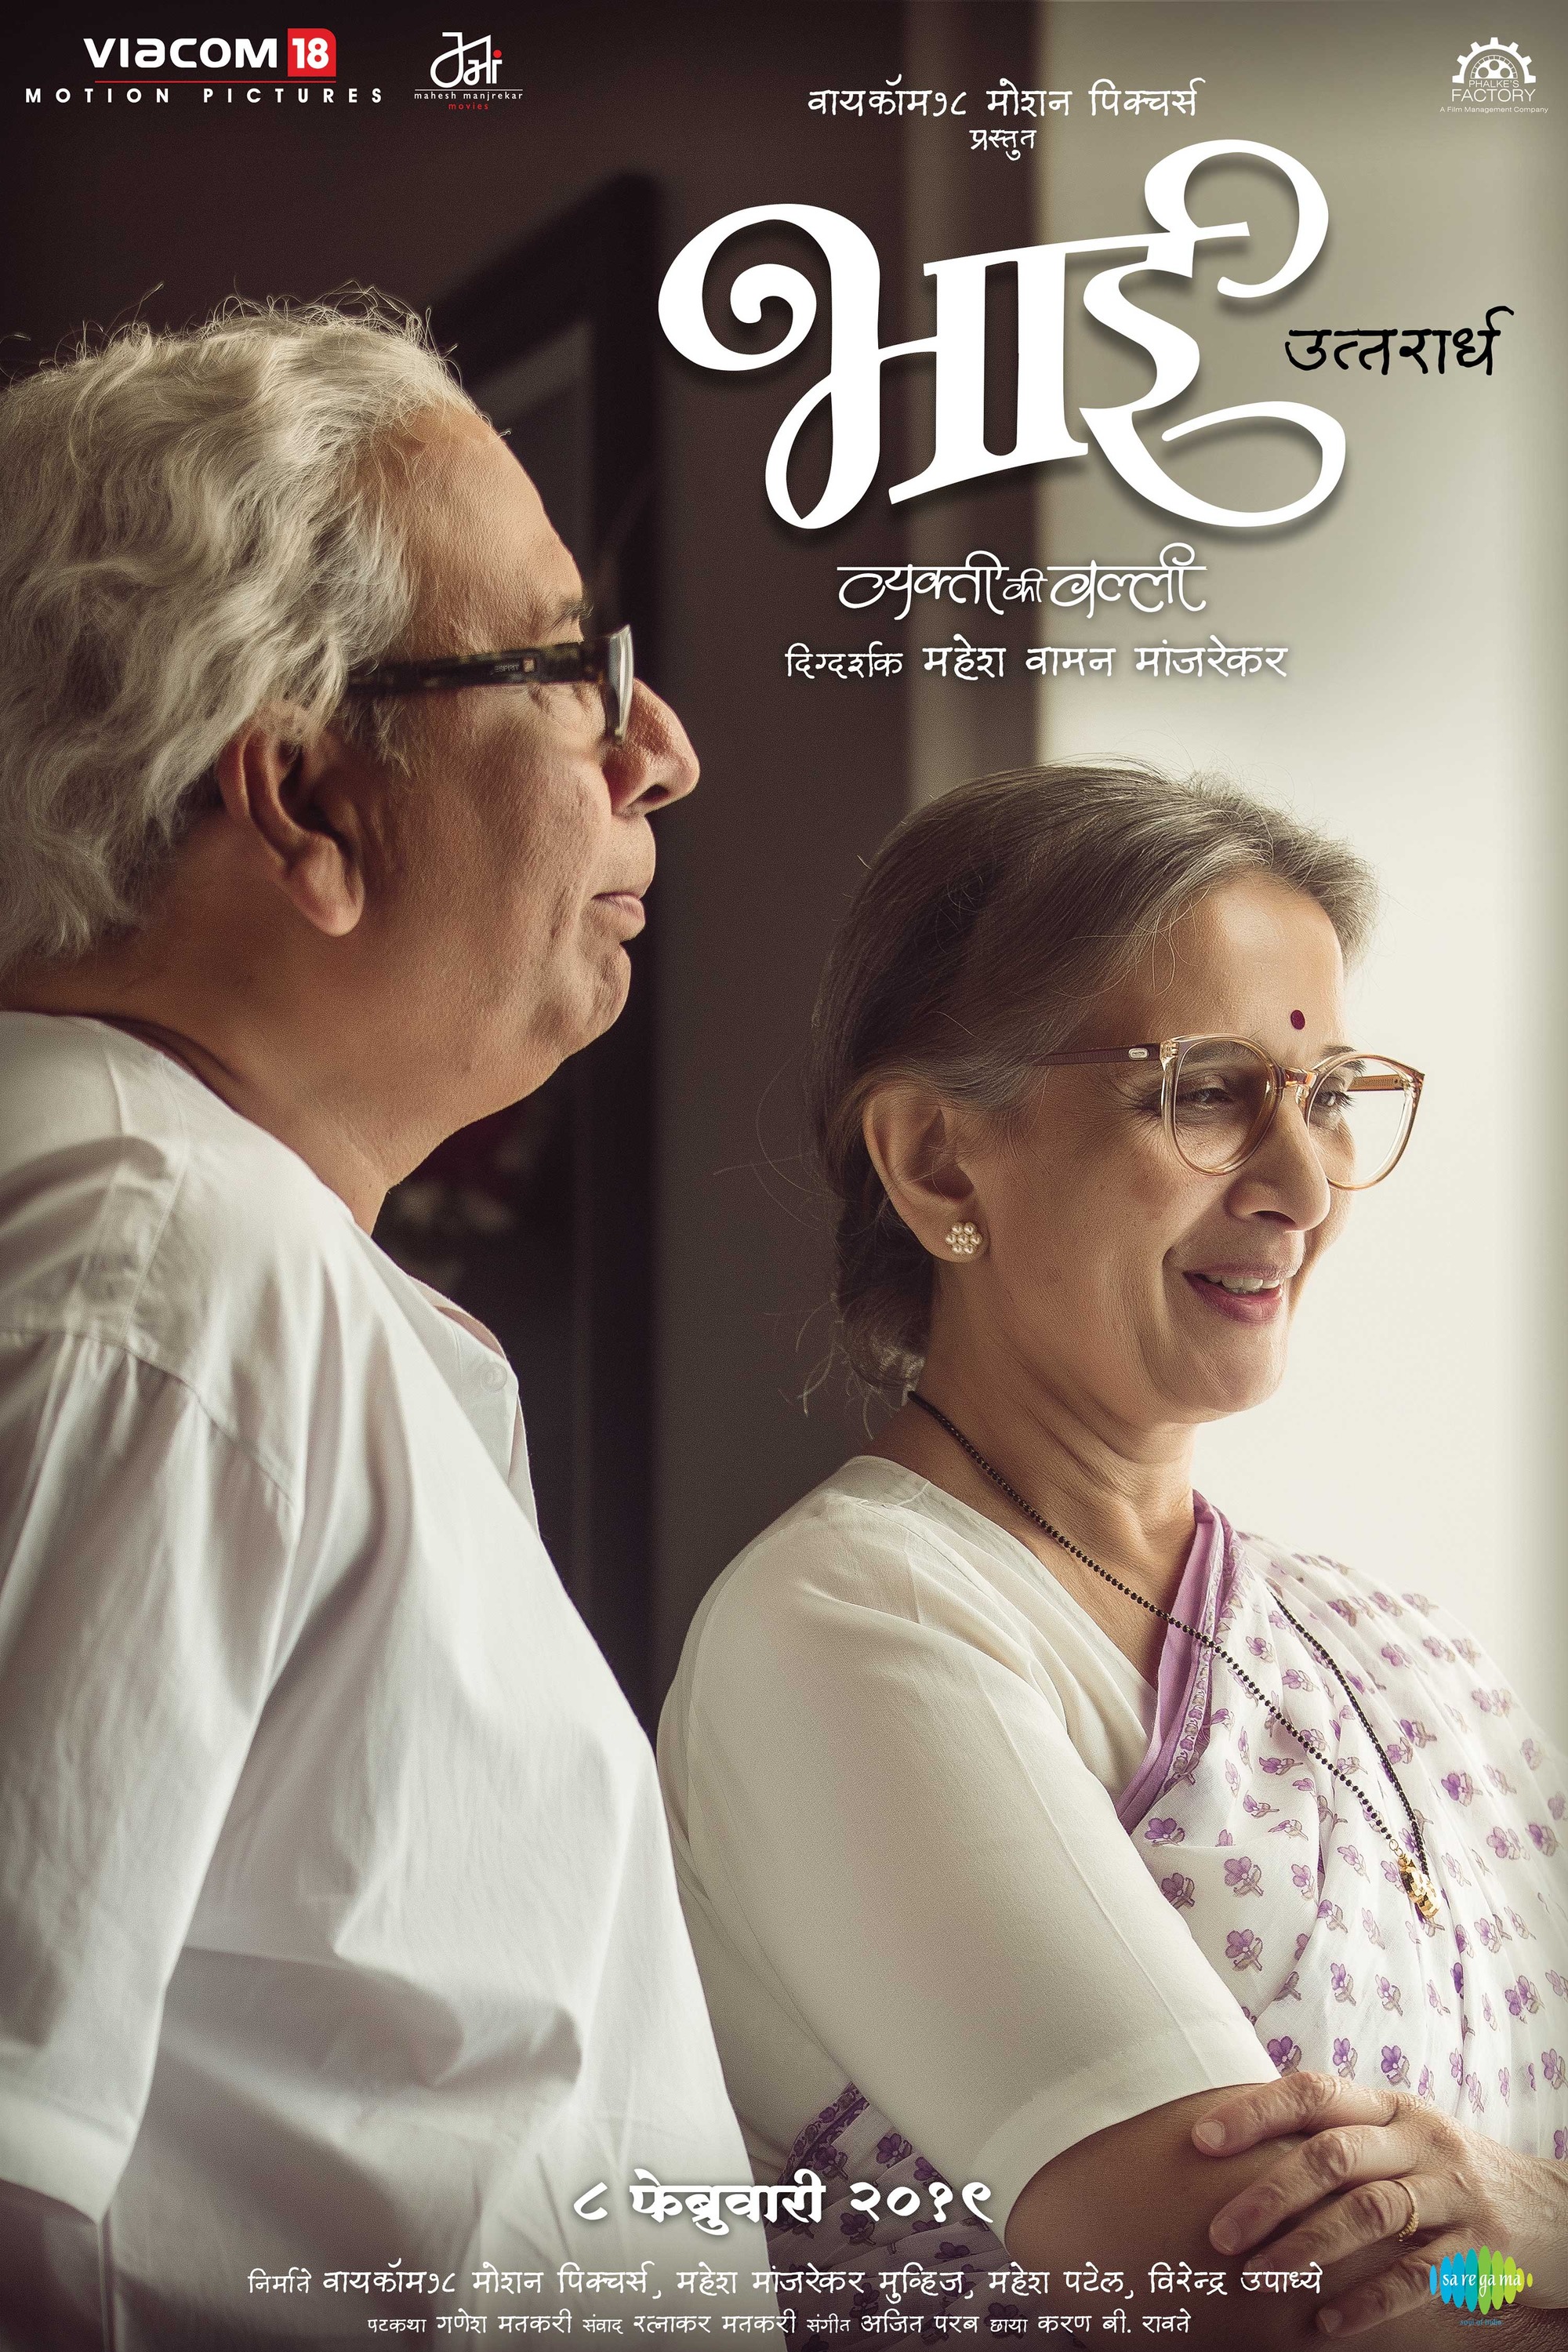 Mega Sized Movie Poster Image for Bhai - Vyakti Ki Valli (#4 of 6)